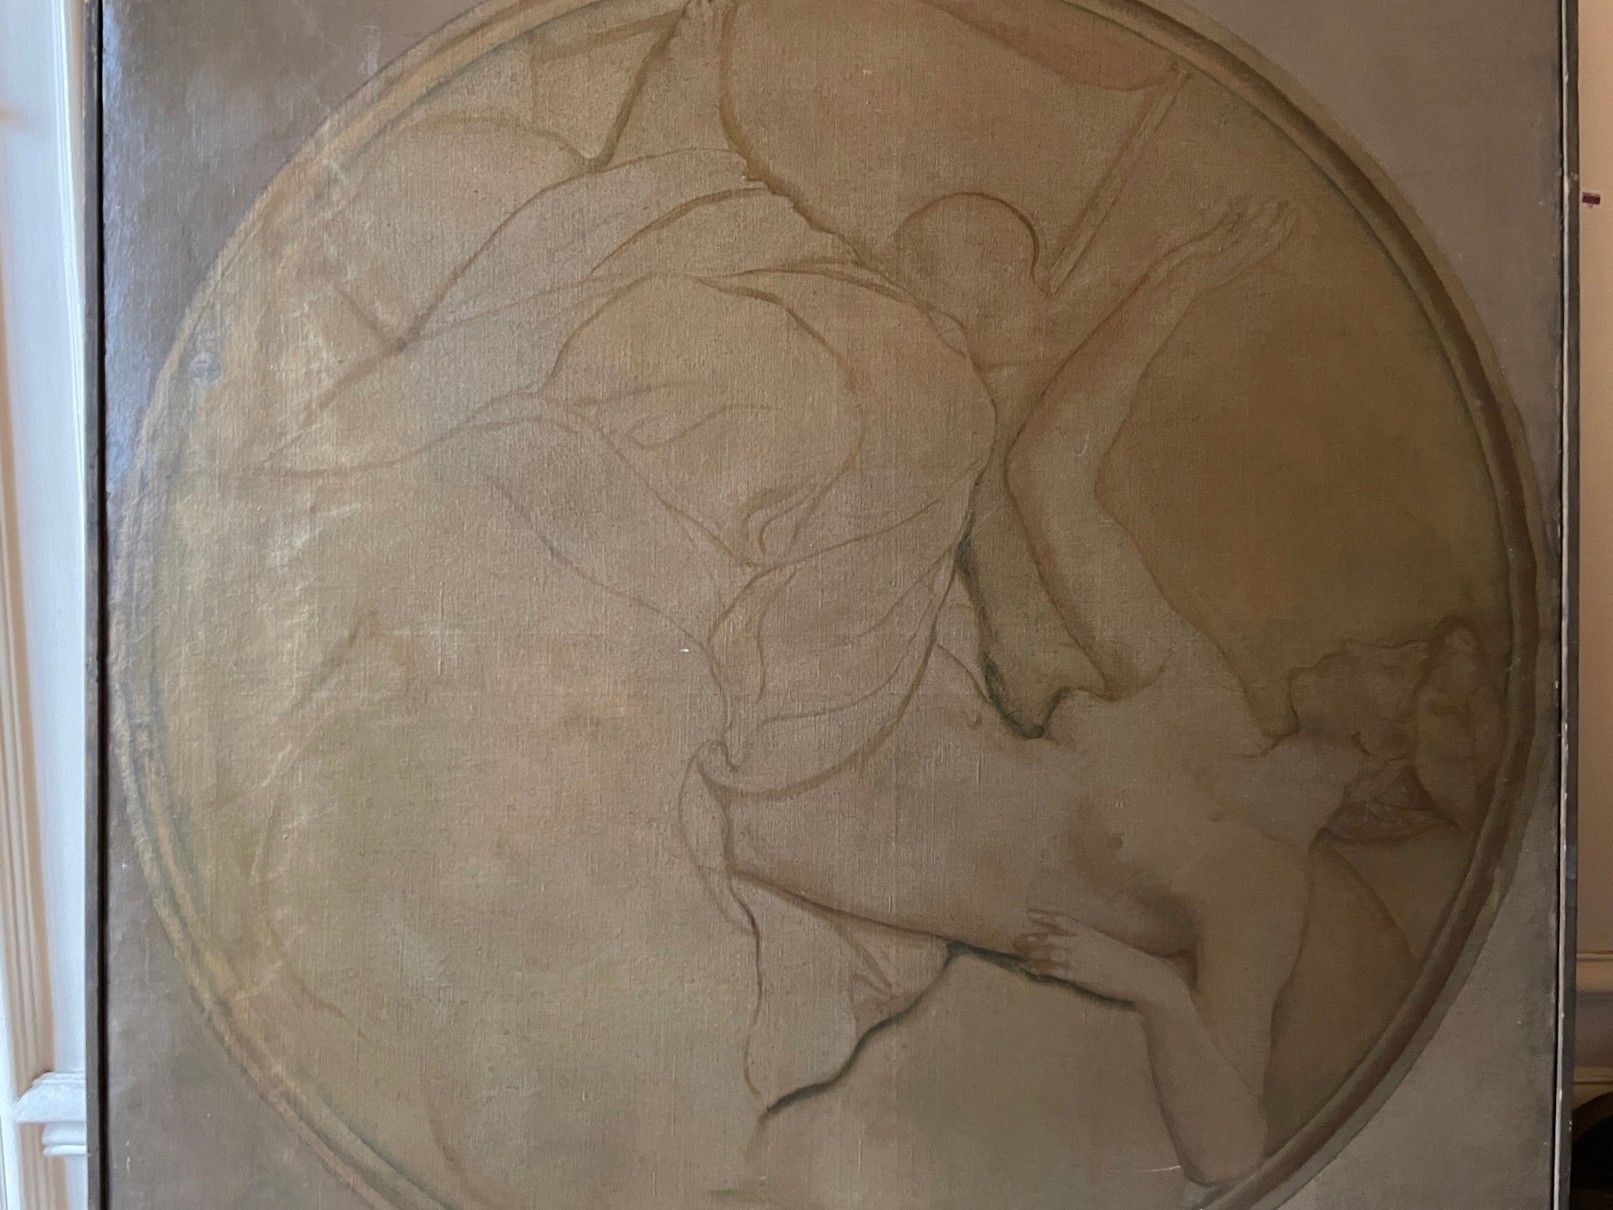 Null 半裸的女神在模拟的奖章中用灰泥画法绘制。

布面油画

119 x 115 cm